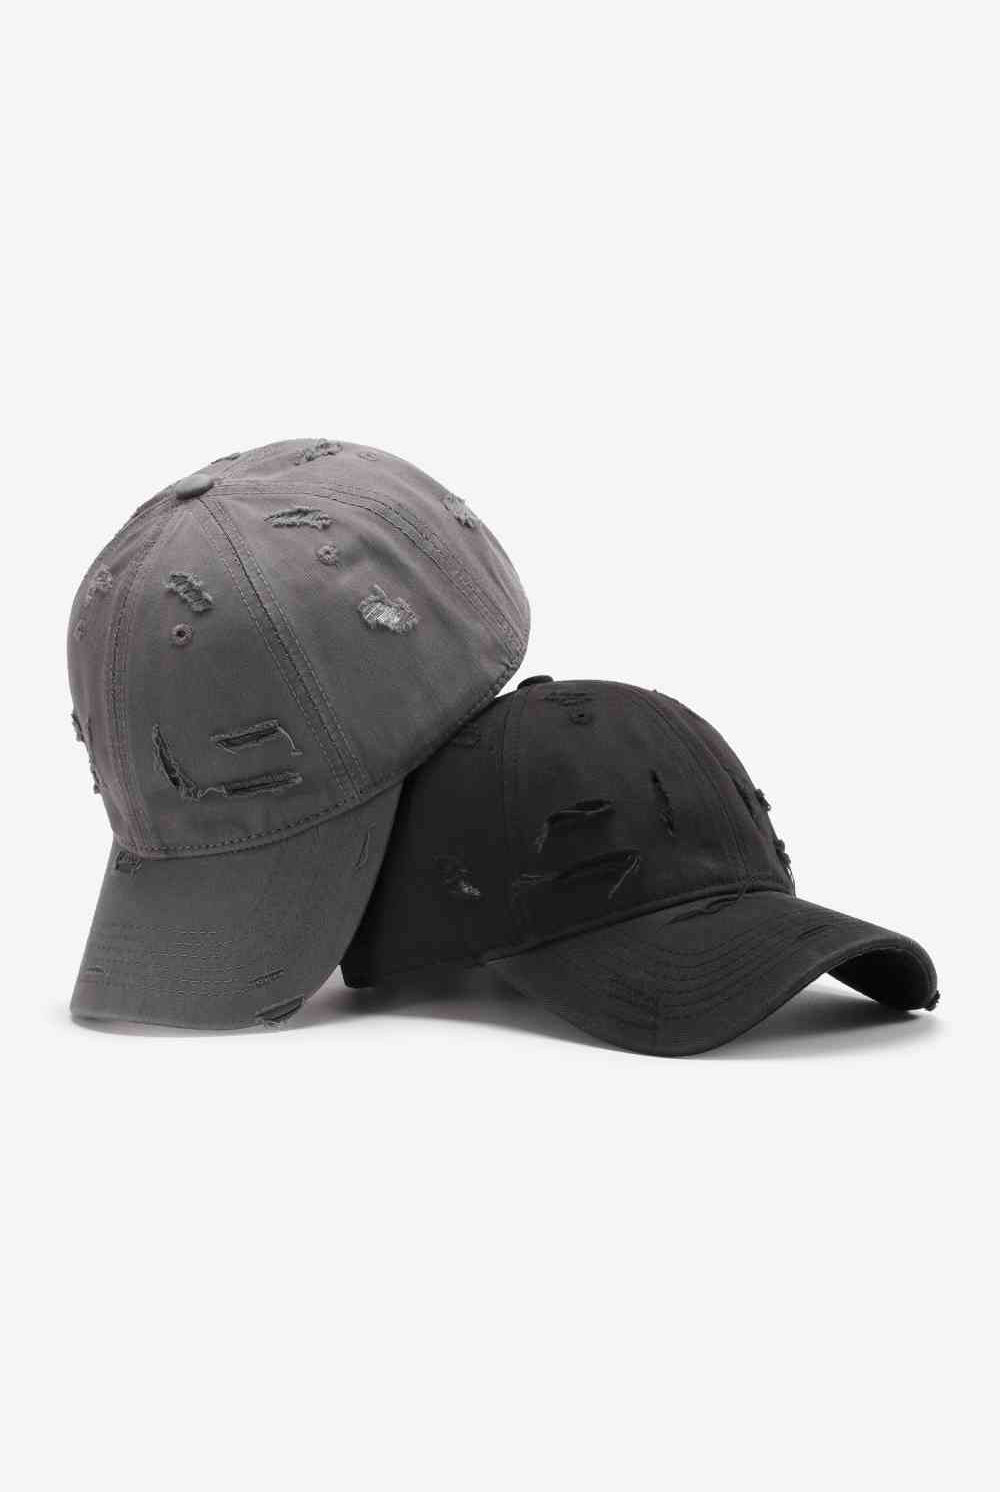 Dark Slate Gray Distressed Adjustable Baseball Cap Gifts